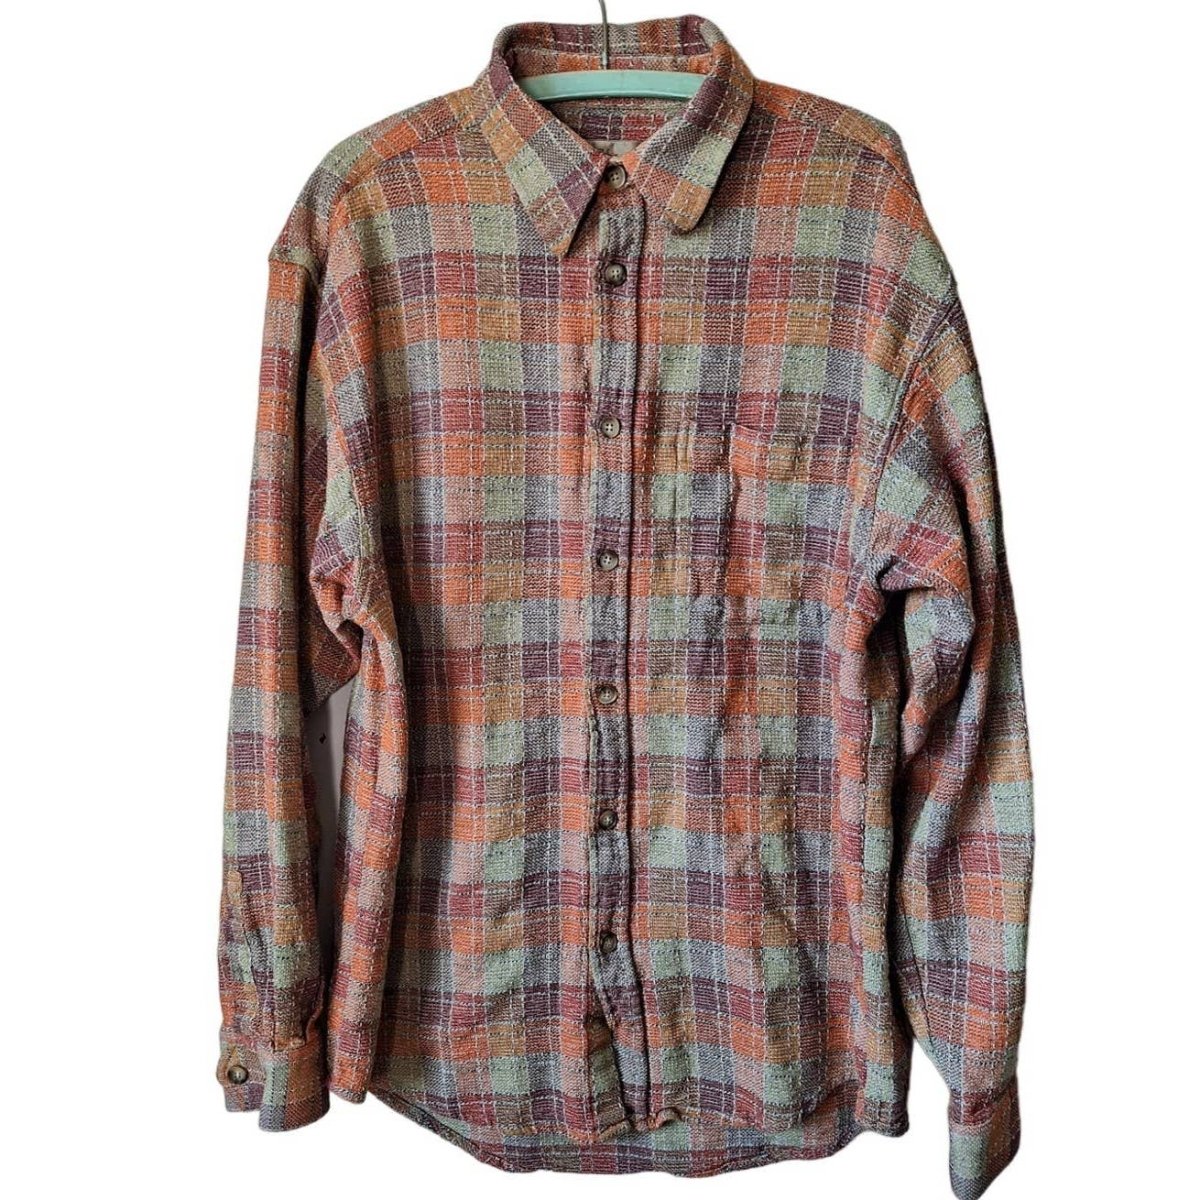 Vintage 80s/90s Cotton Knit Plaid Shirt Men's Size XL - themallvintage The Mall Vintage